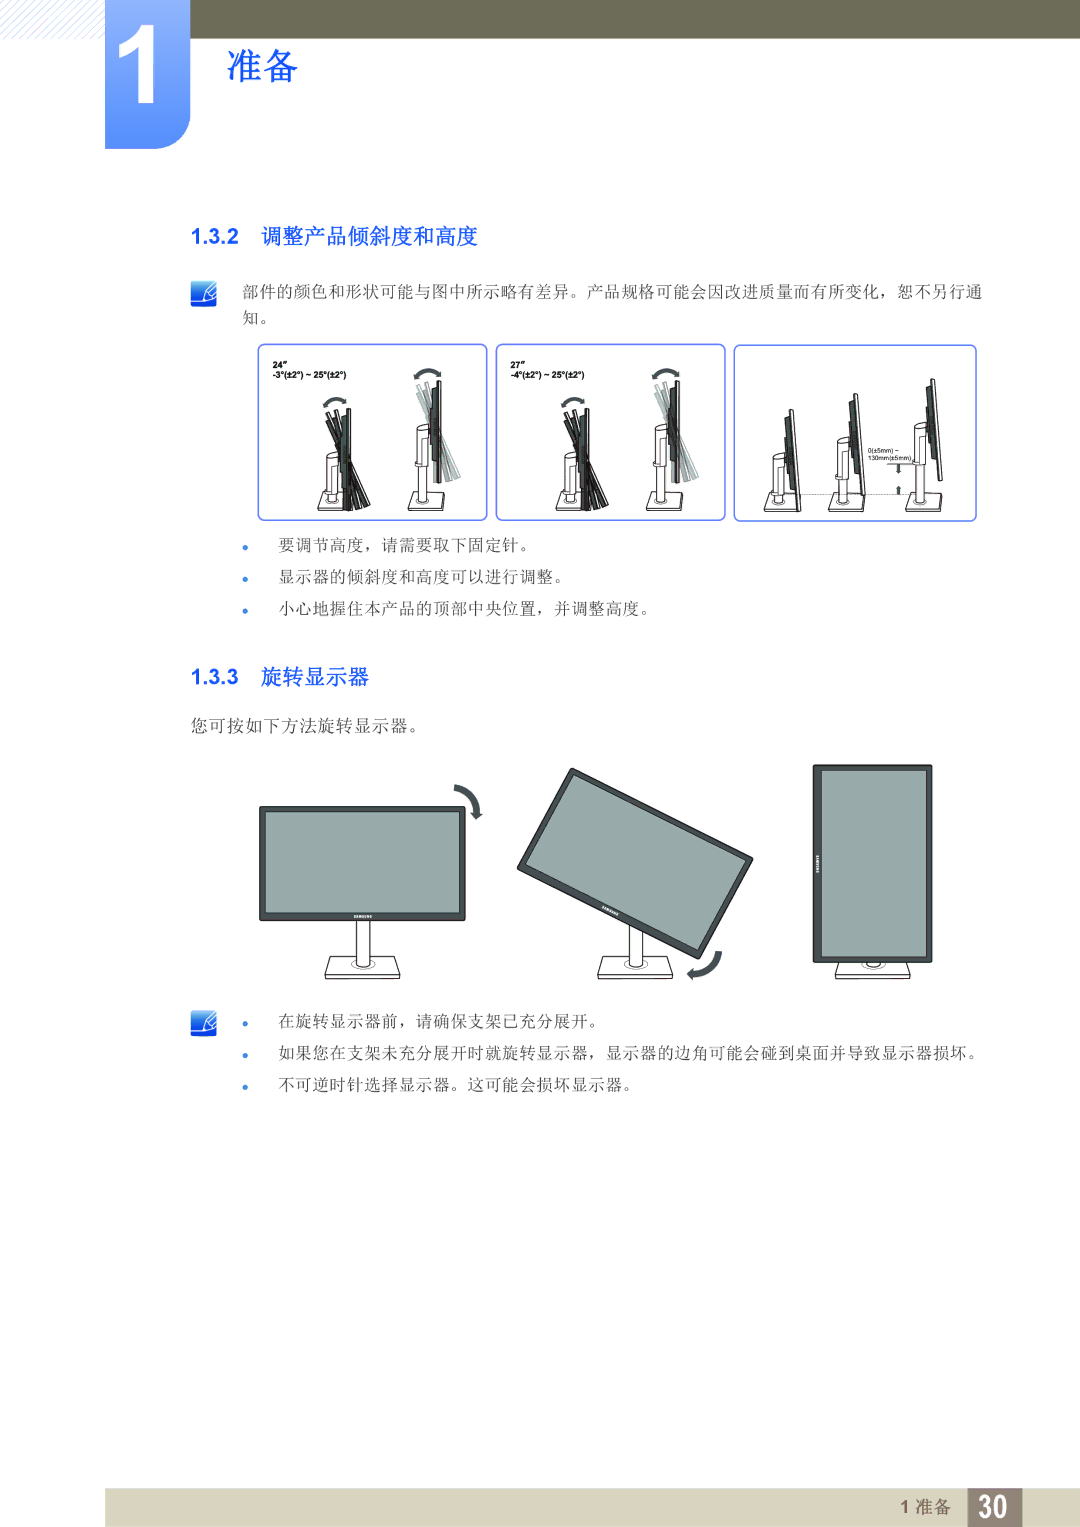 Samsung LS27C65UXS/EN, LS24C65KMWG/EN, LS24C65UXWF/EN, LS24C65KBWV/EN, LS24C65UDW/EN manual 2 调整产品倾斜度和高度, 3 旋转显示器 